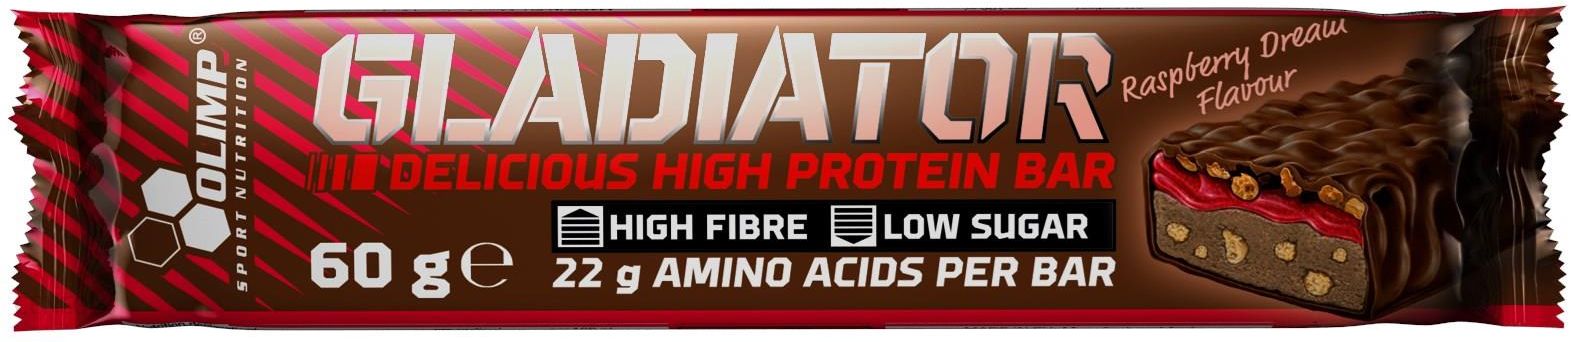 Olimp Gladiator High Protein Bar 60g